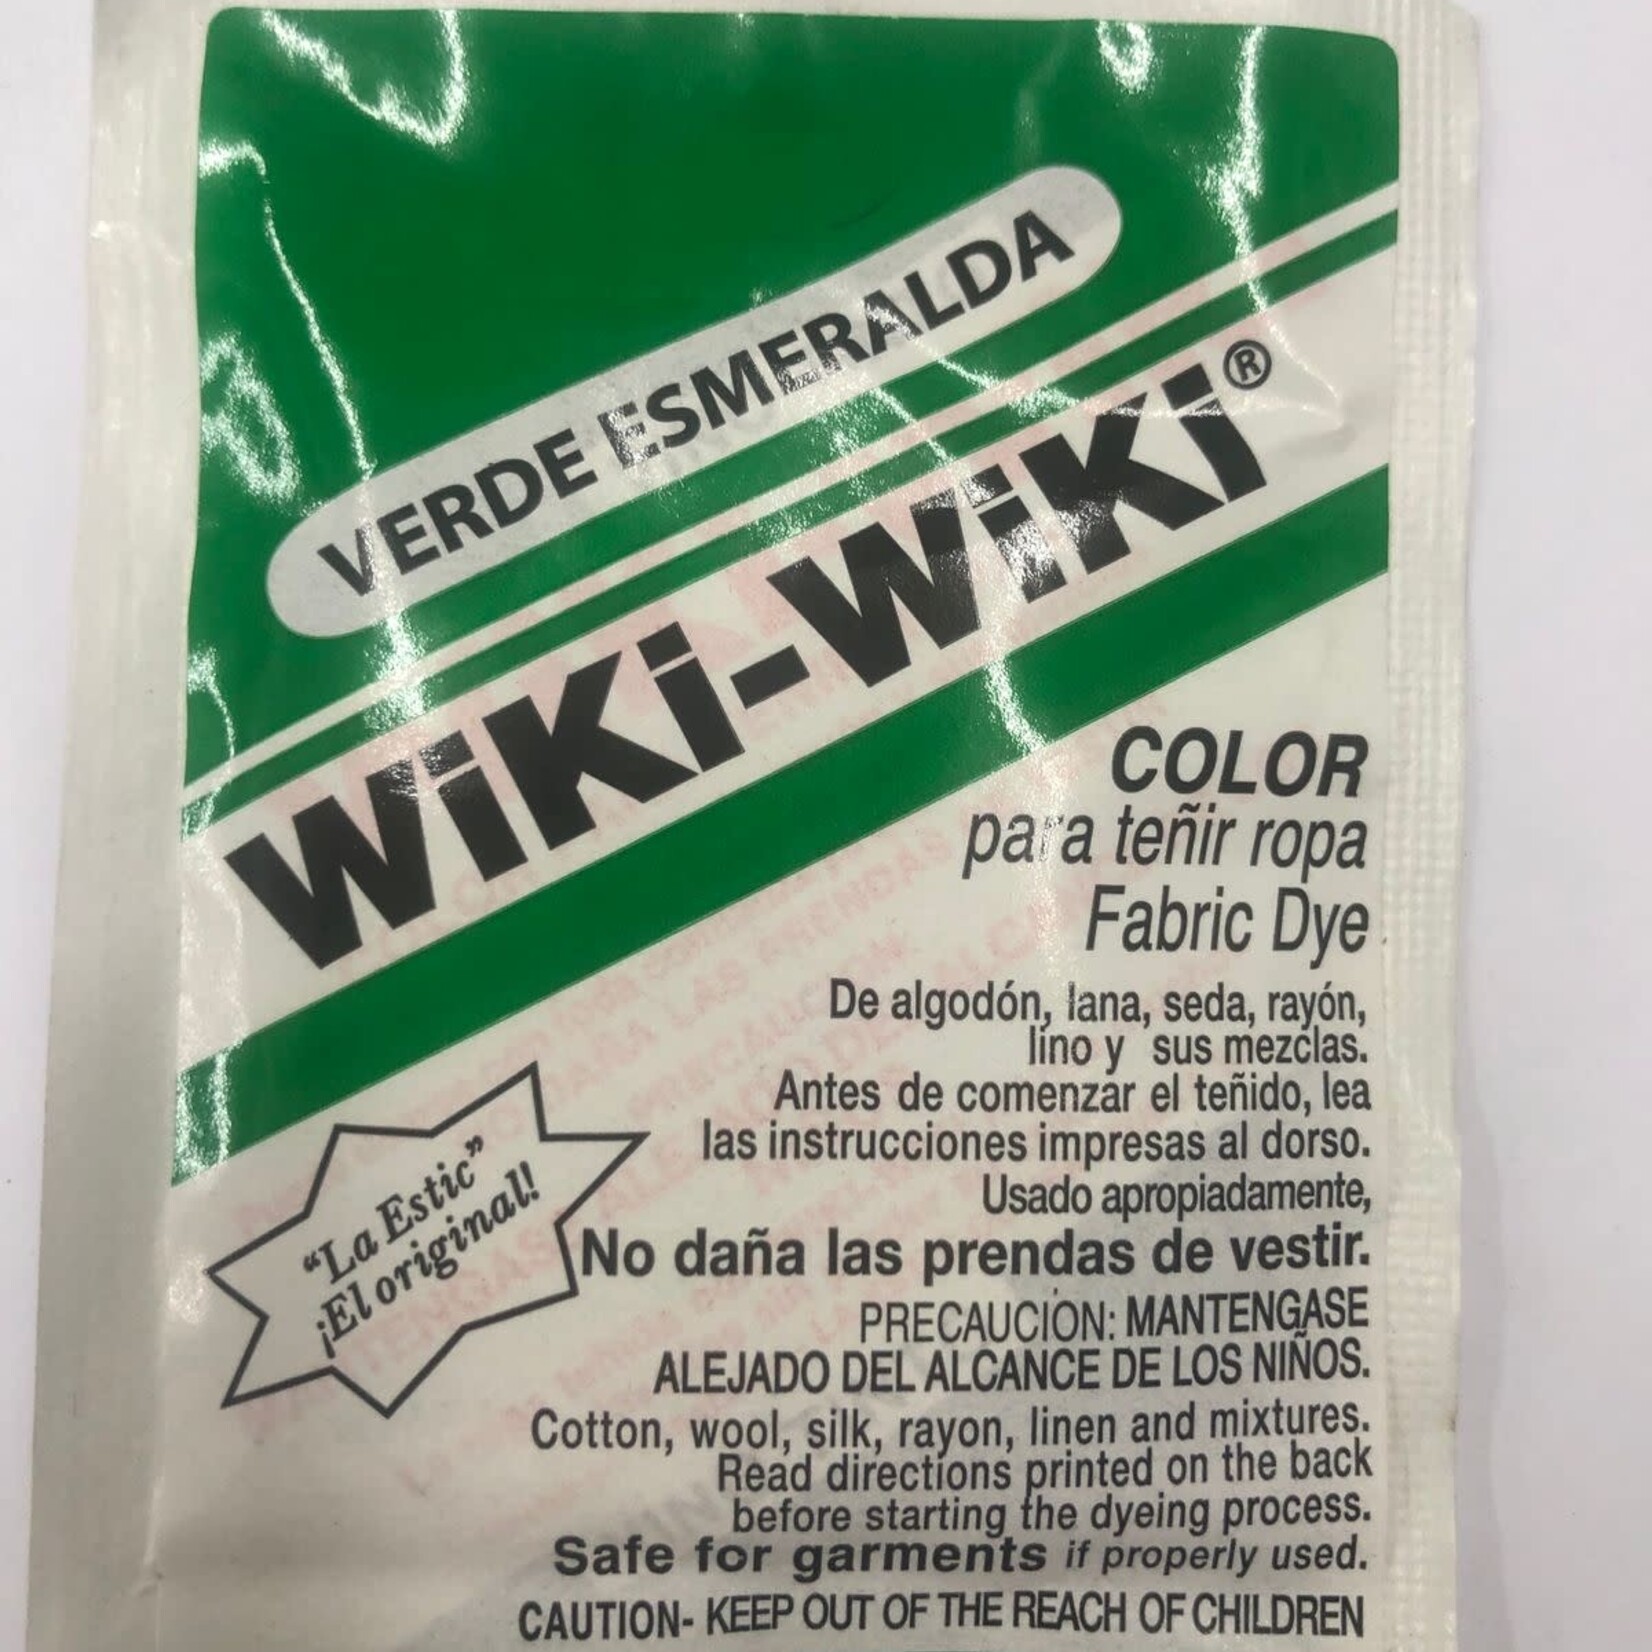 Wiki-Wiki Fabric Dye Emerald Green(Verde Esmeralda)